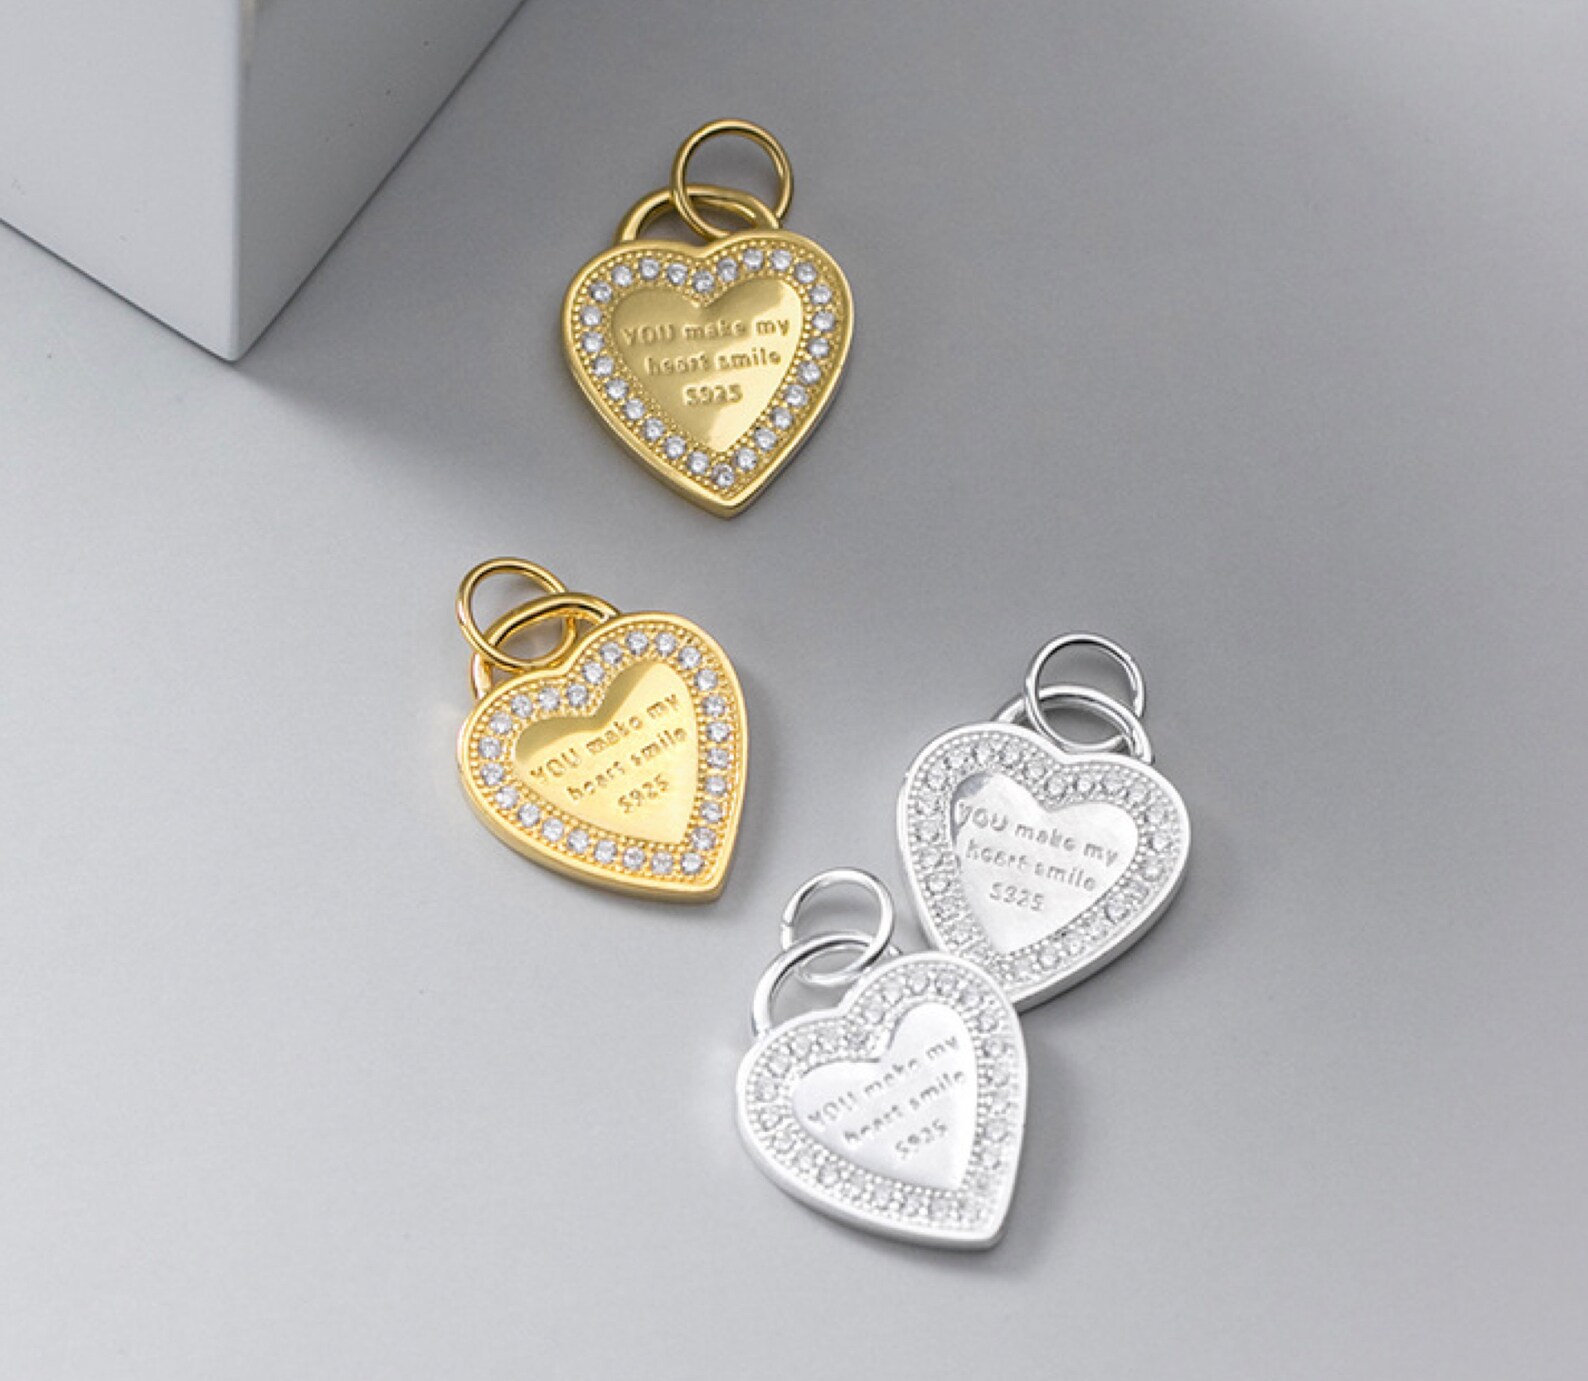 S925 Sterling Silver pendant Heart shape pendant necklace | Etsy